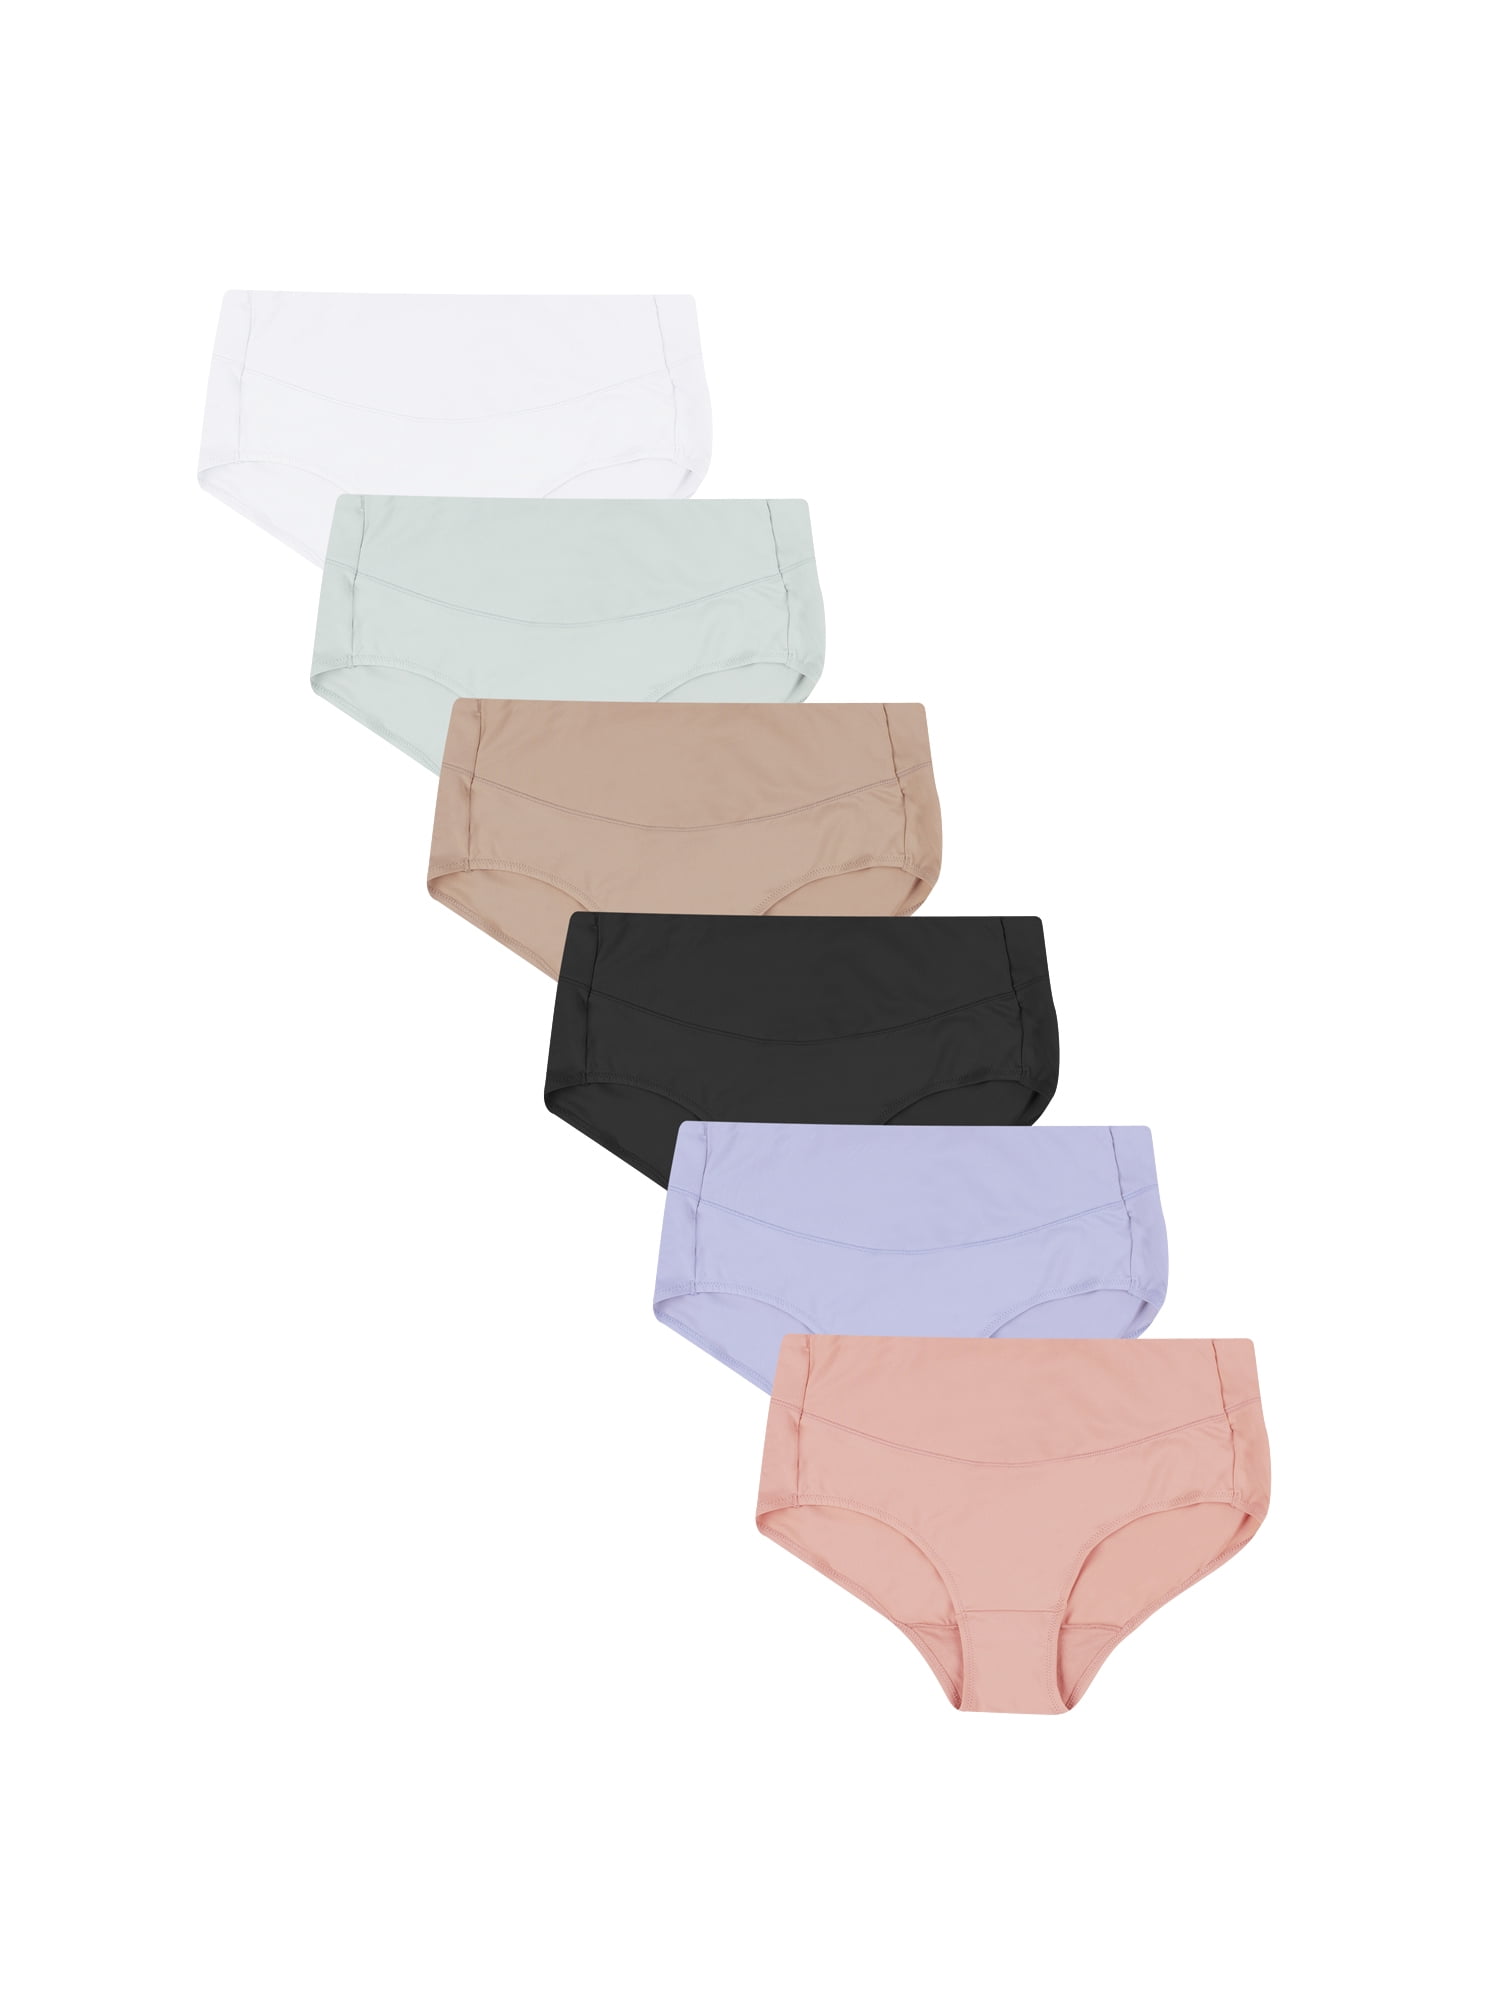 Hanes Women's Pure Comfort Microfiber Brief Underwear, 6-Pack 